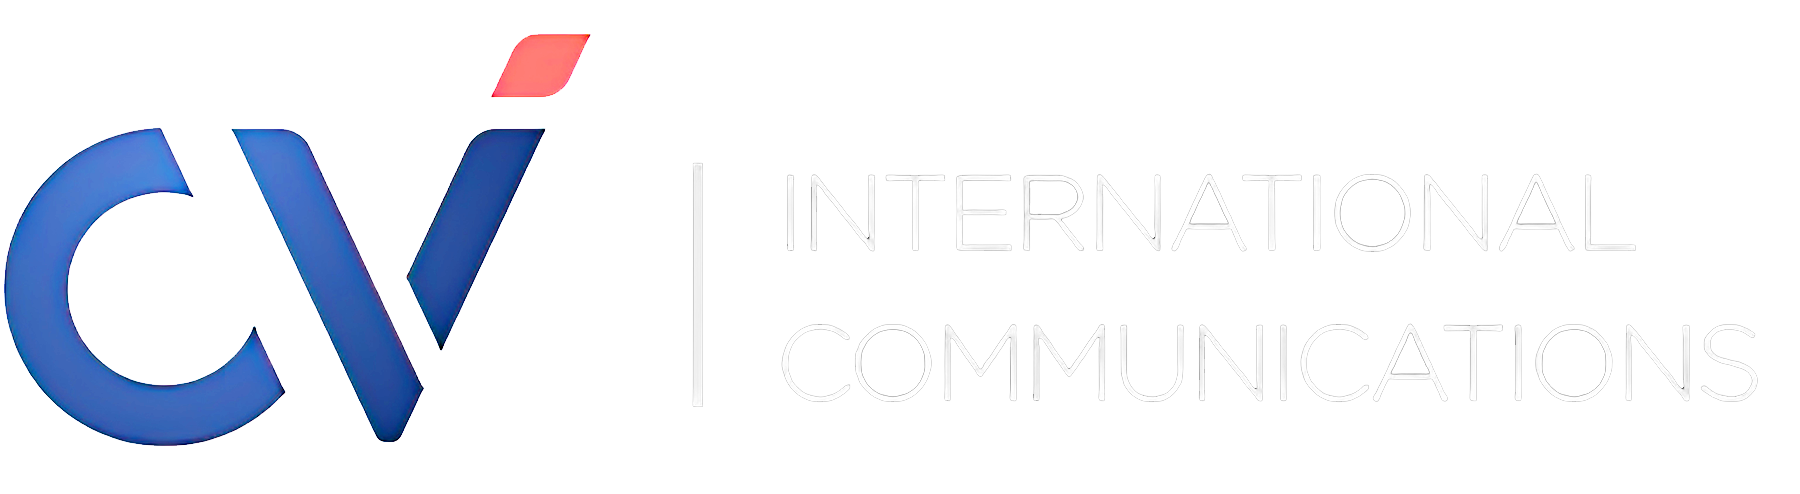 CV International Communications